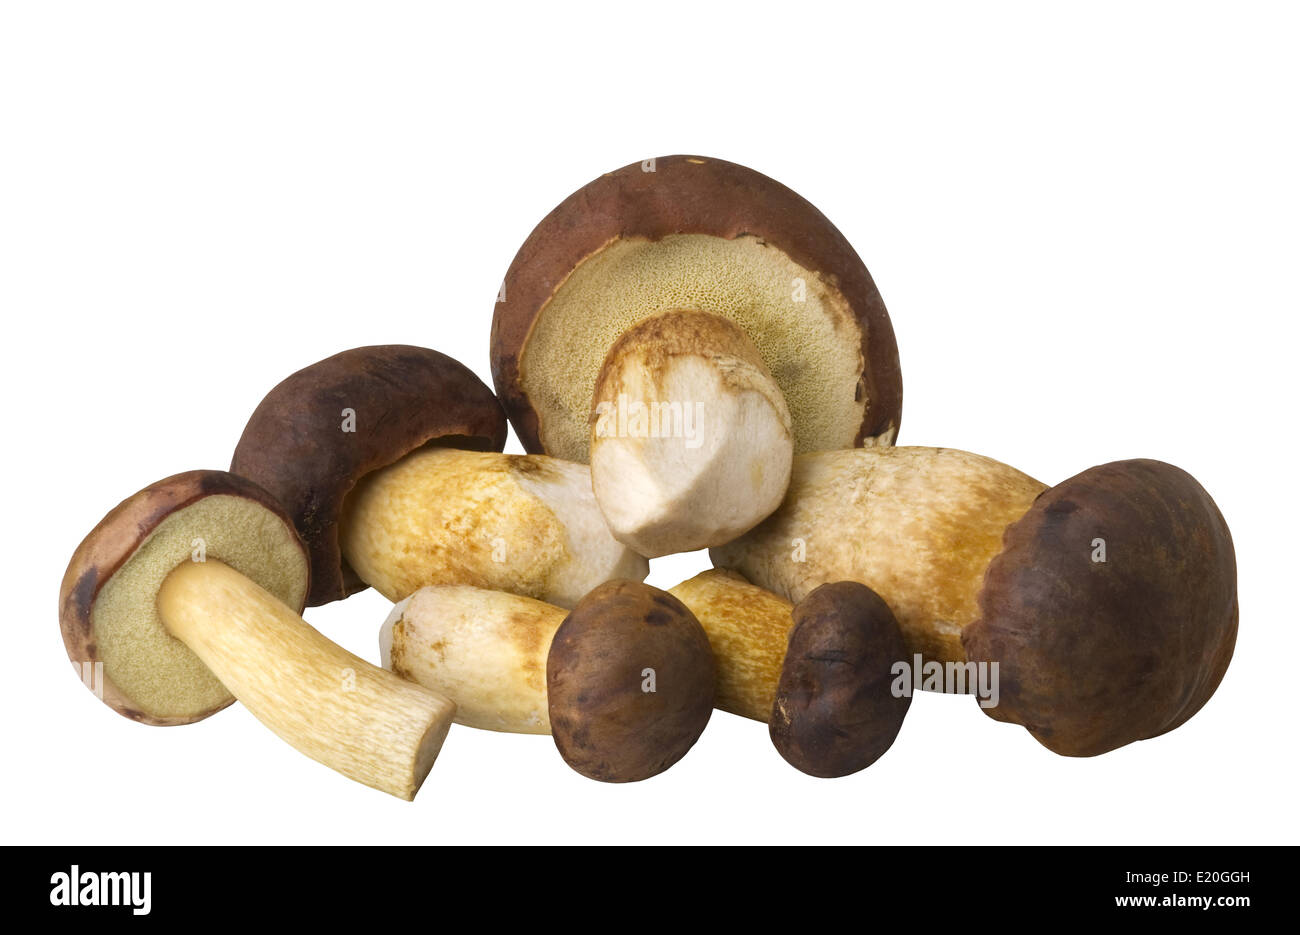 edible mushrooms Stock Photo